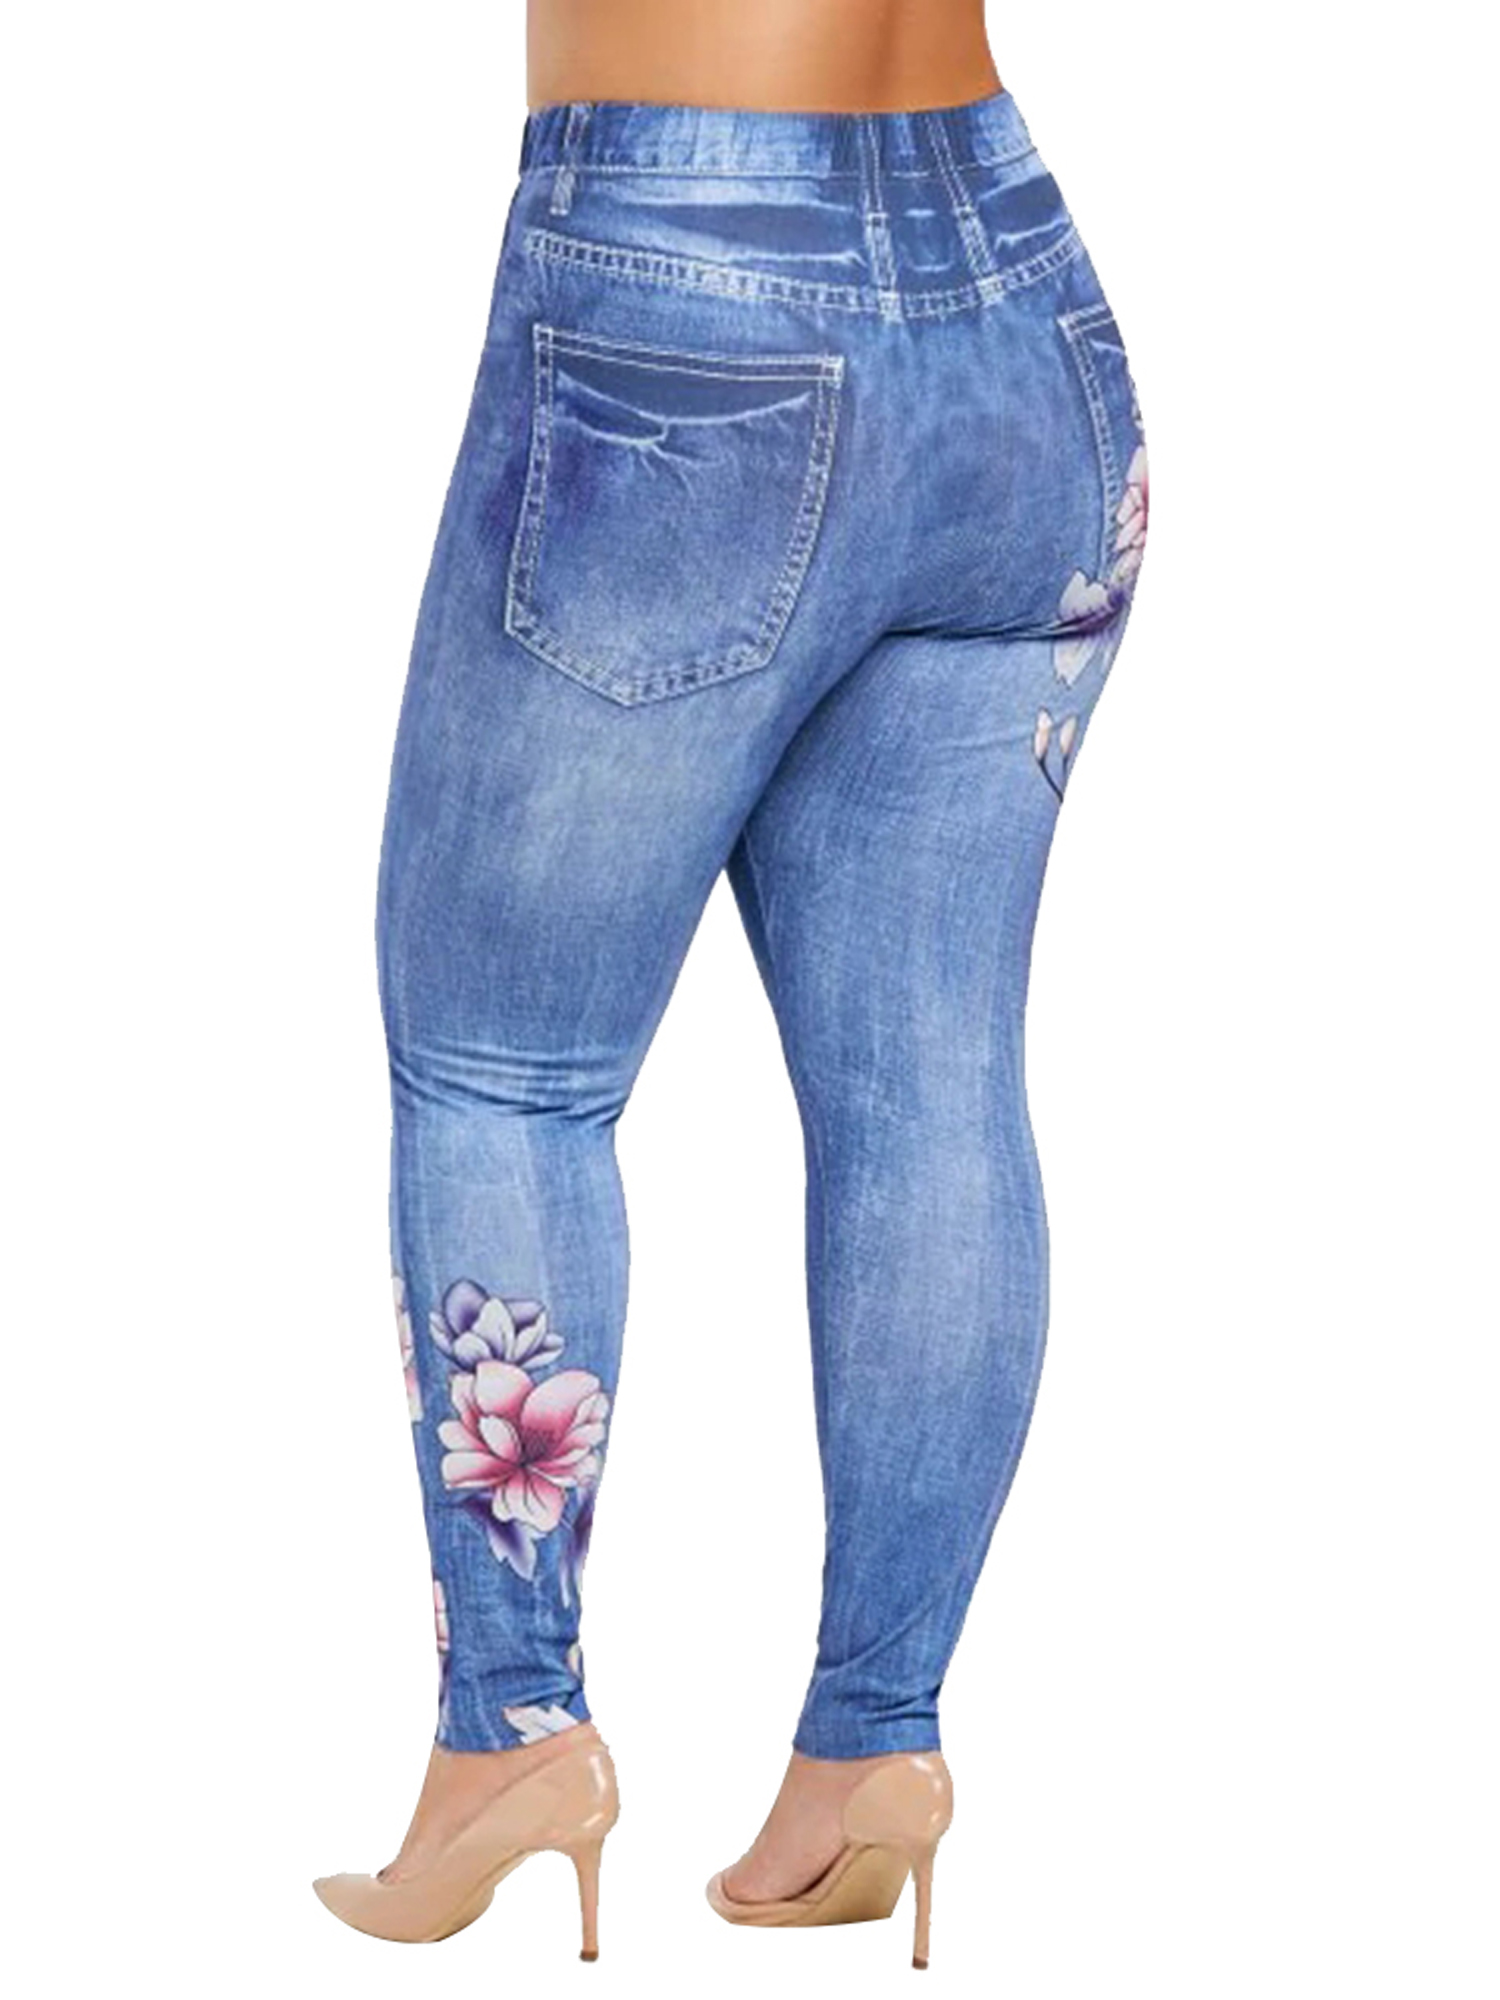 JustVH Women Plus Size Casual Stretch Leggings Skinny Imitation Denim Print Jeggings Pants - image 3 of 4